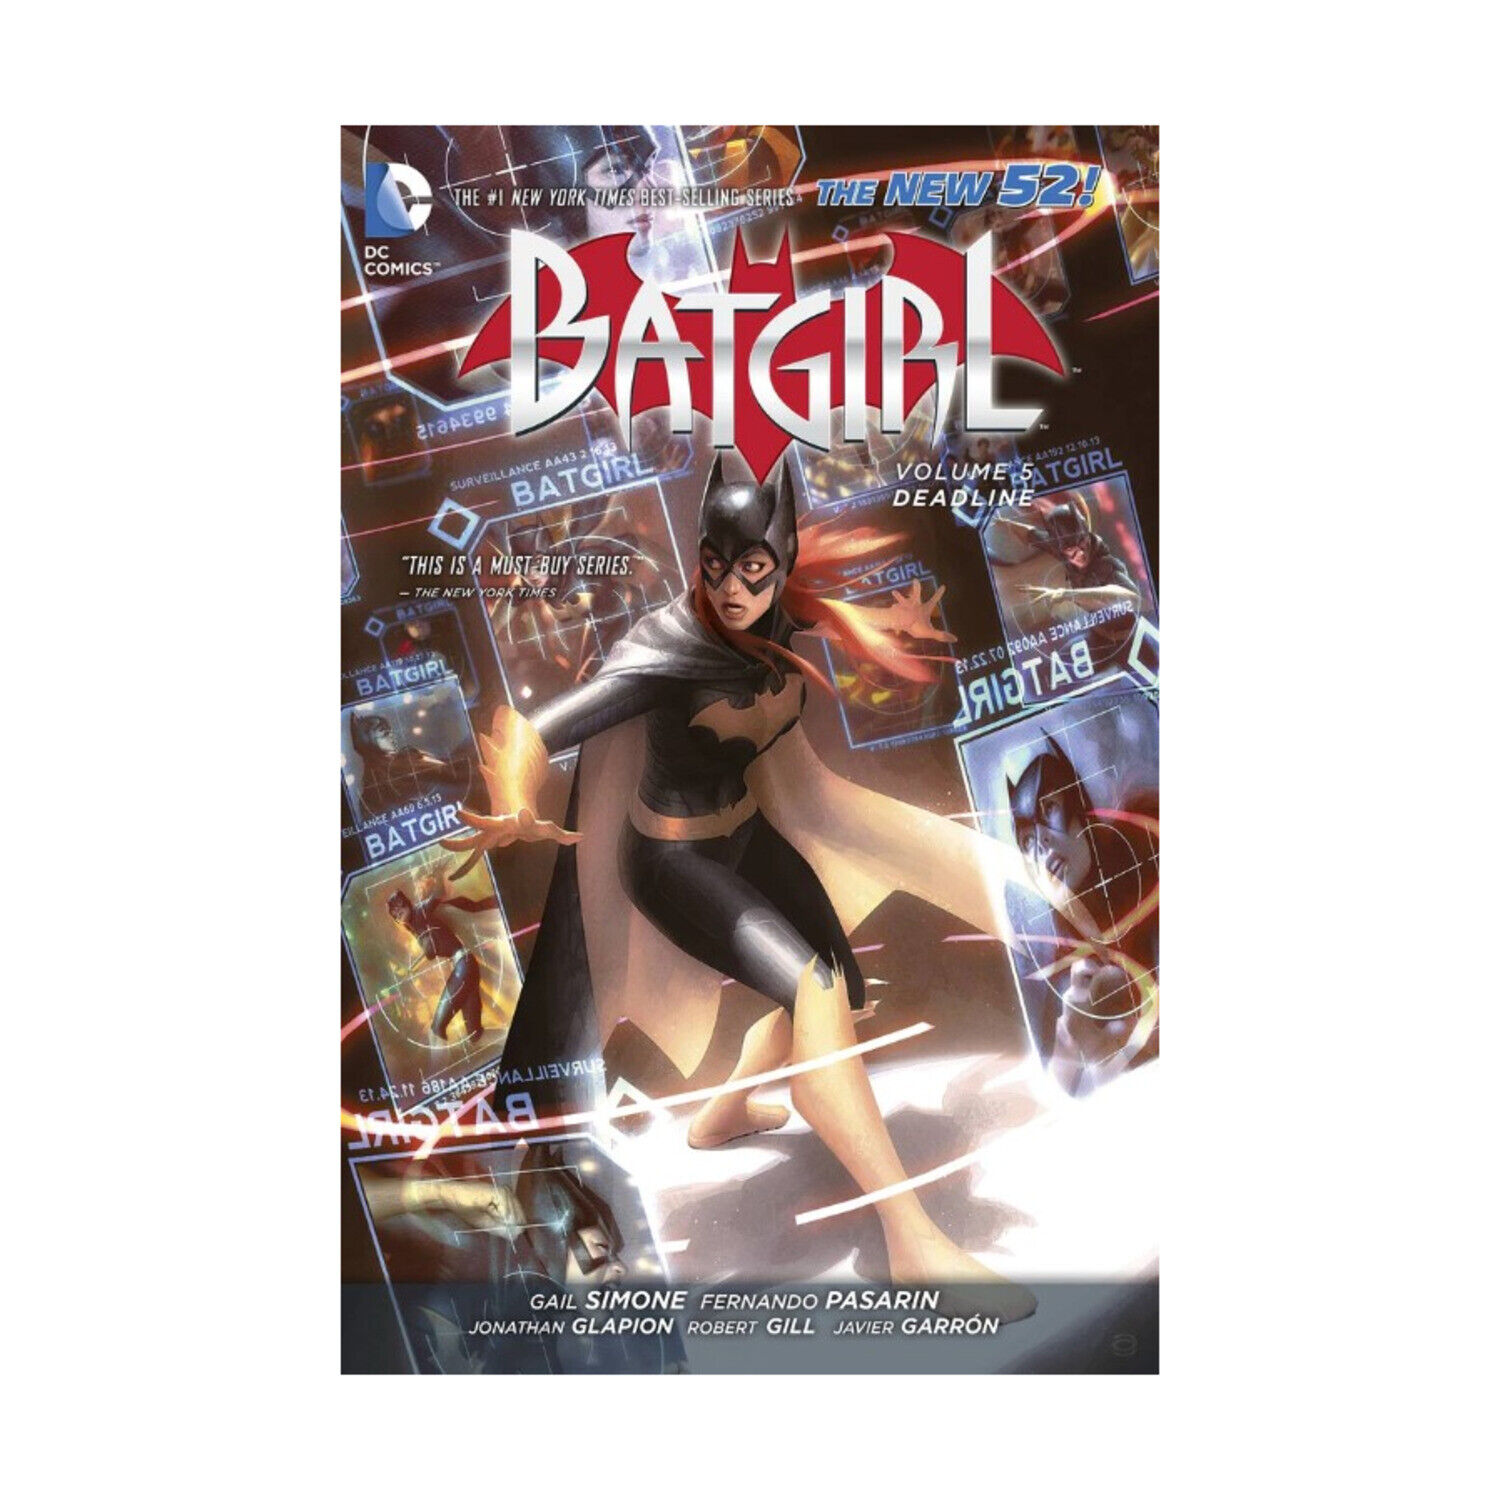 Vertigo Batgirl Batgirl Vol. 5 - Deadline NM